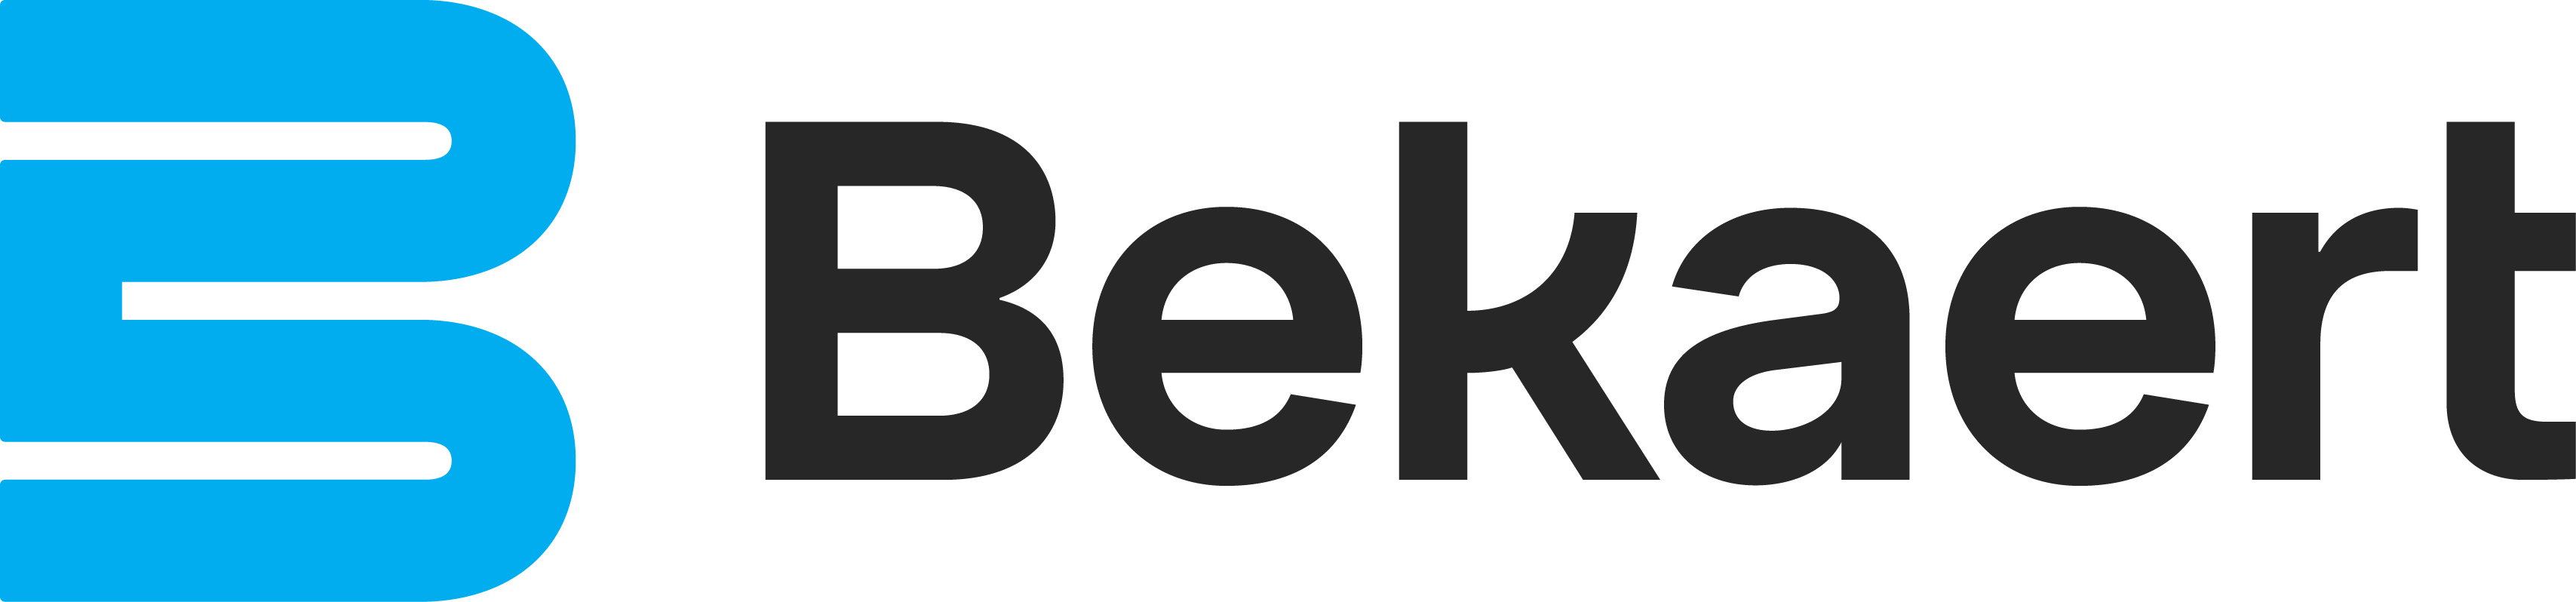 Bekaert-logo